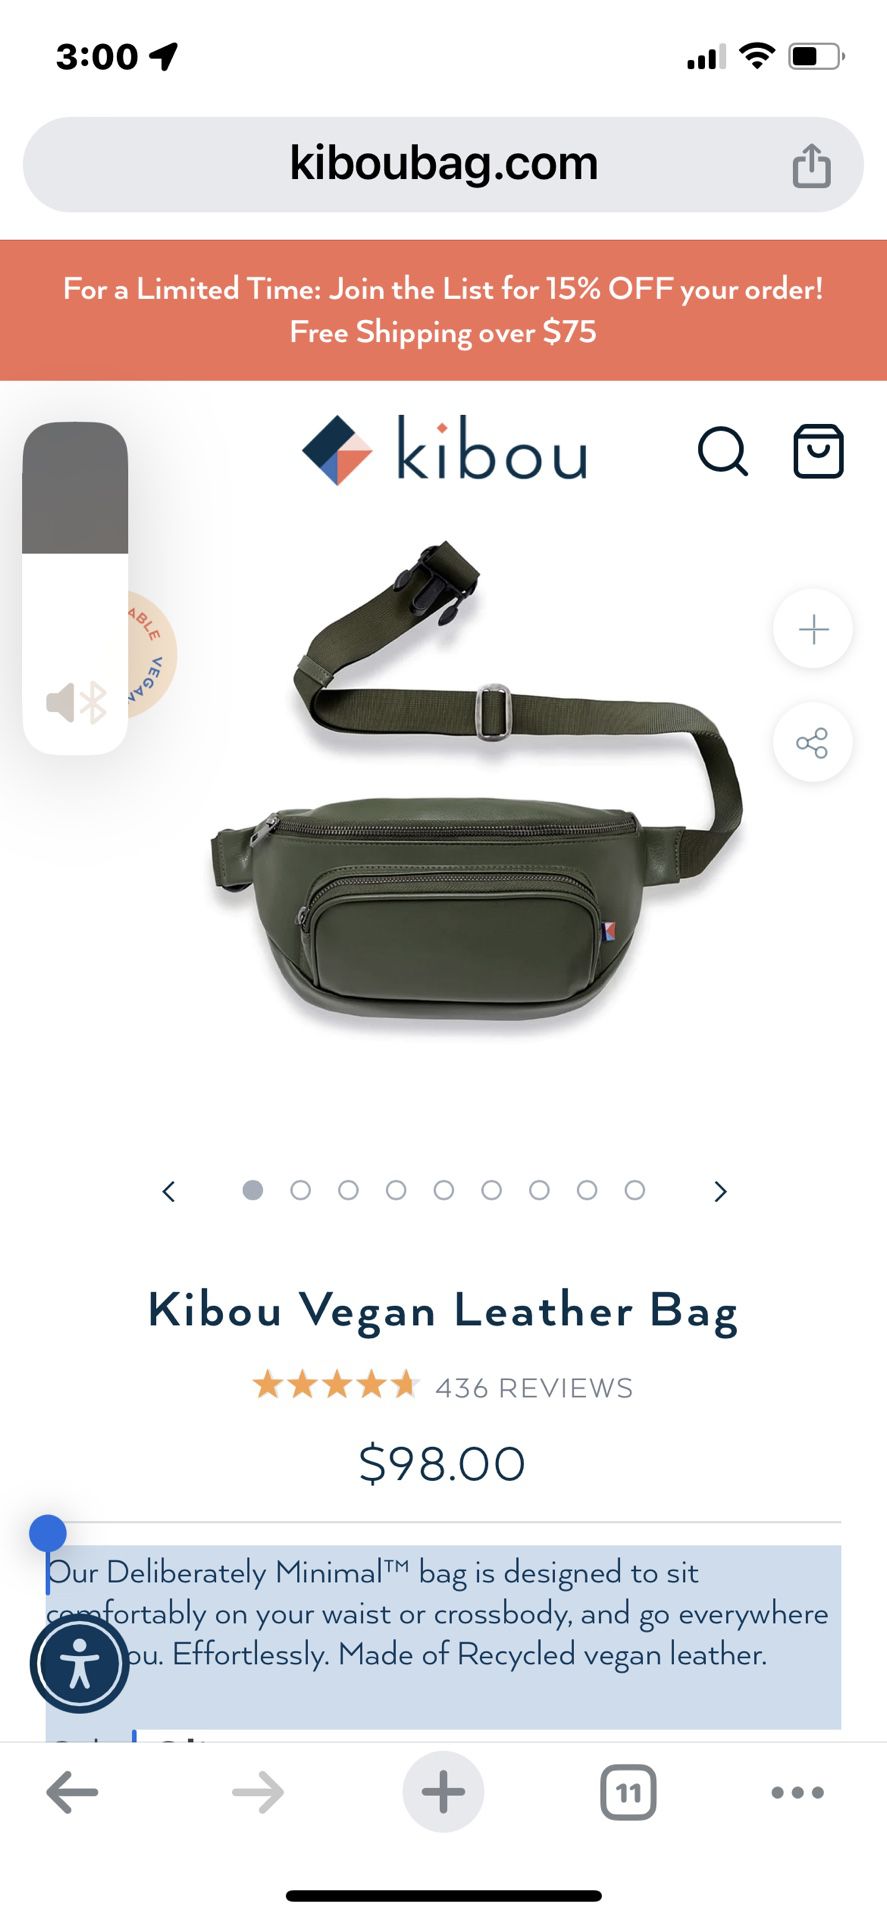 Kibou Vegan Leather Bag